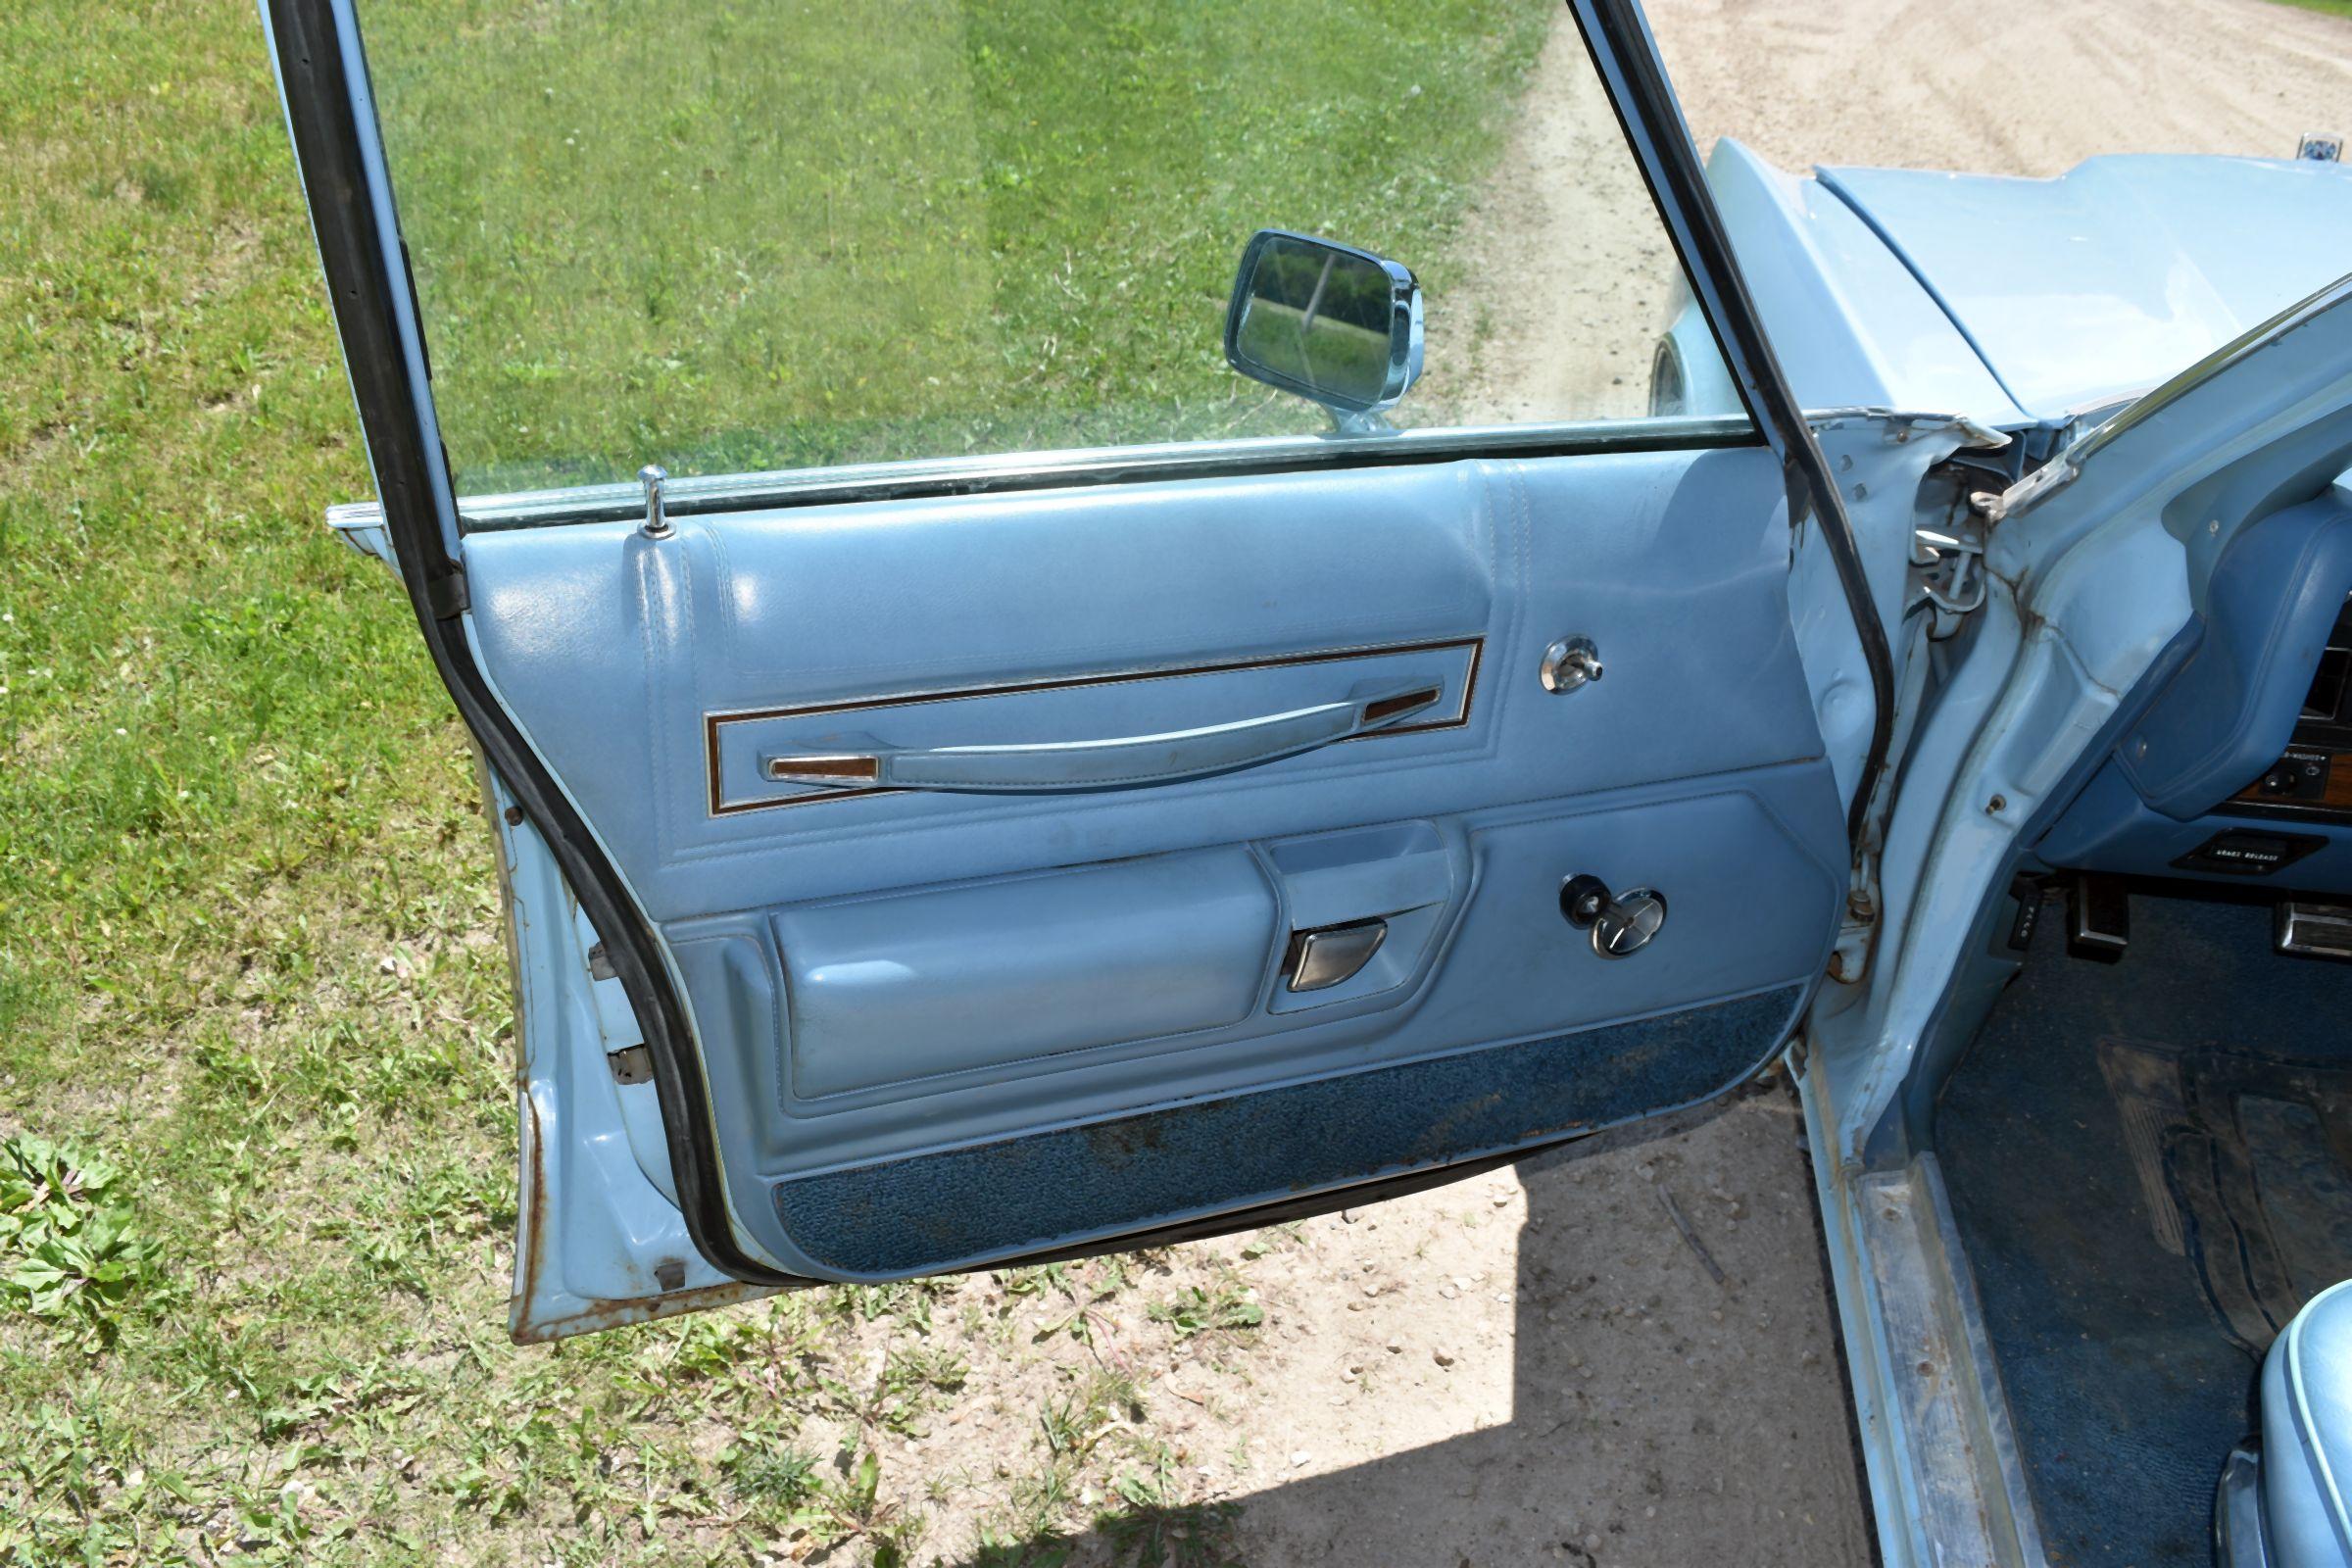 1977 Chrysler Newport 4 Door Car, 52,741 Miles, 400ci Engine, Auto Transmission, Leather Interior, V